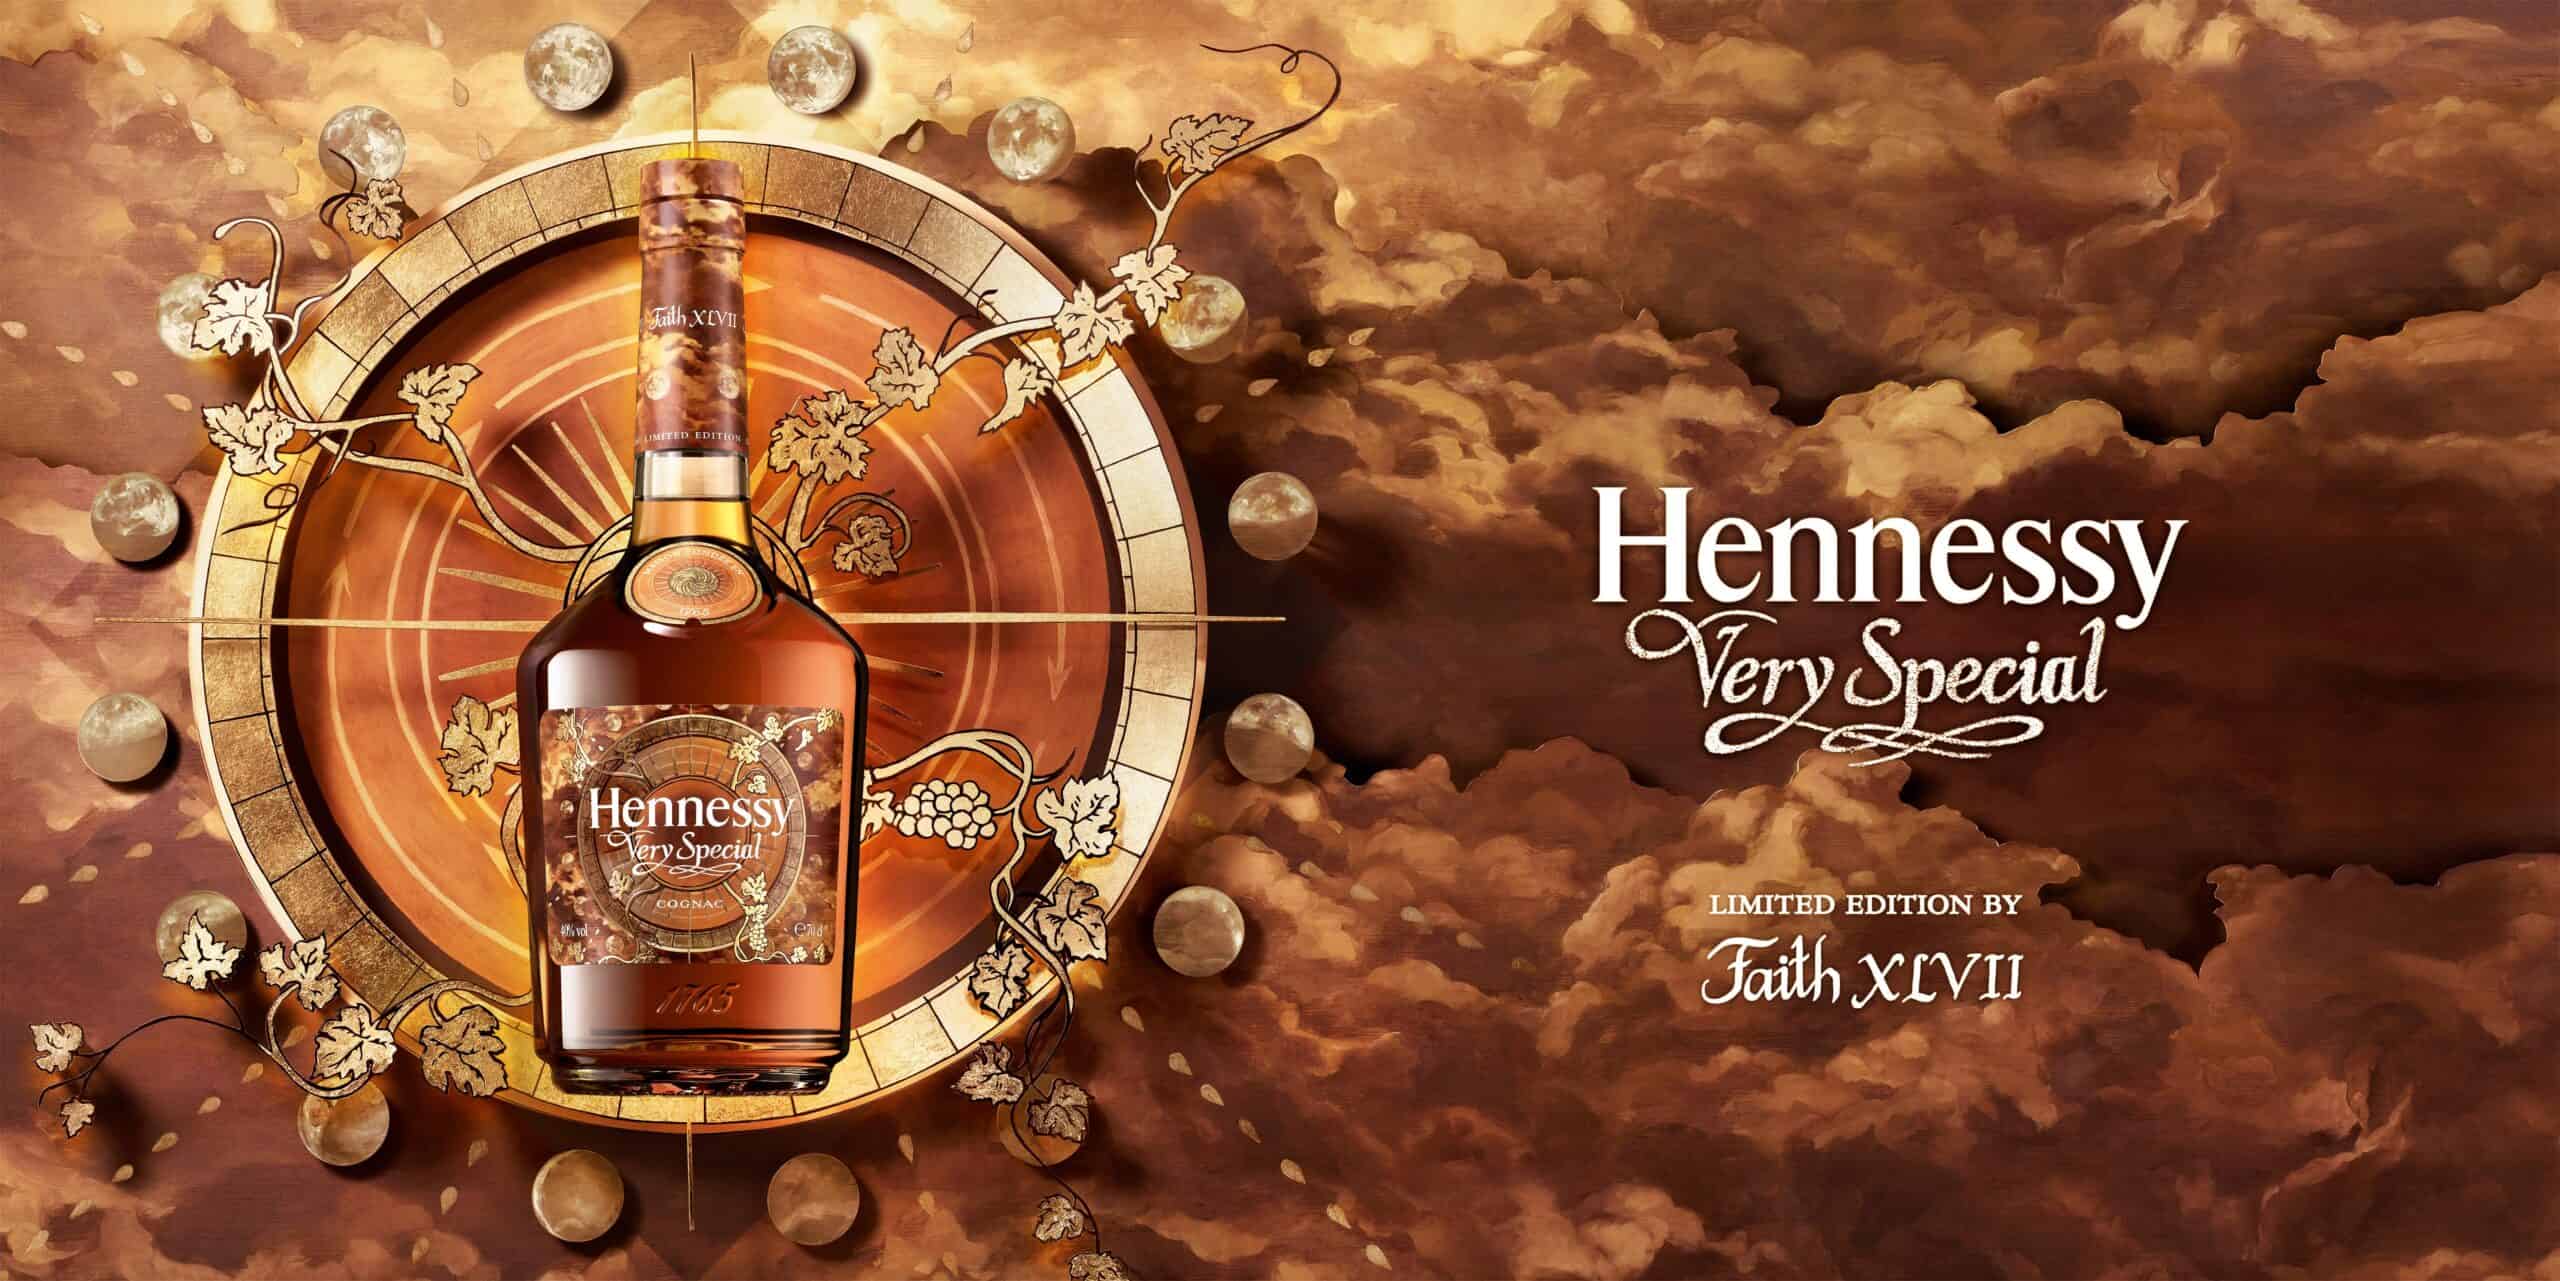 Faith XLVII ontwerpt unieke fles voor Hennessy